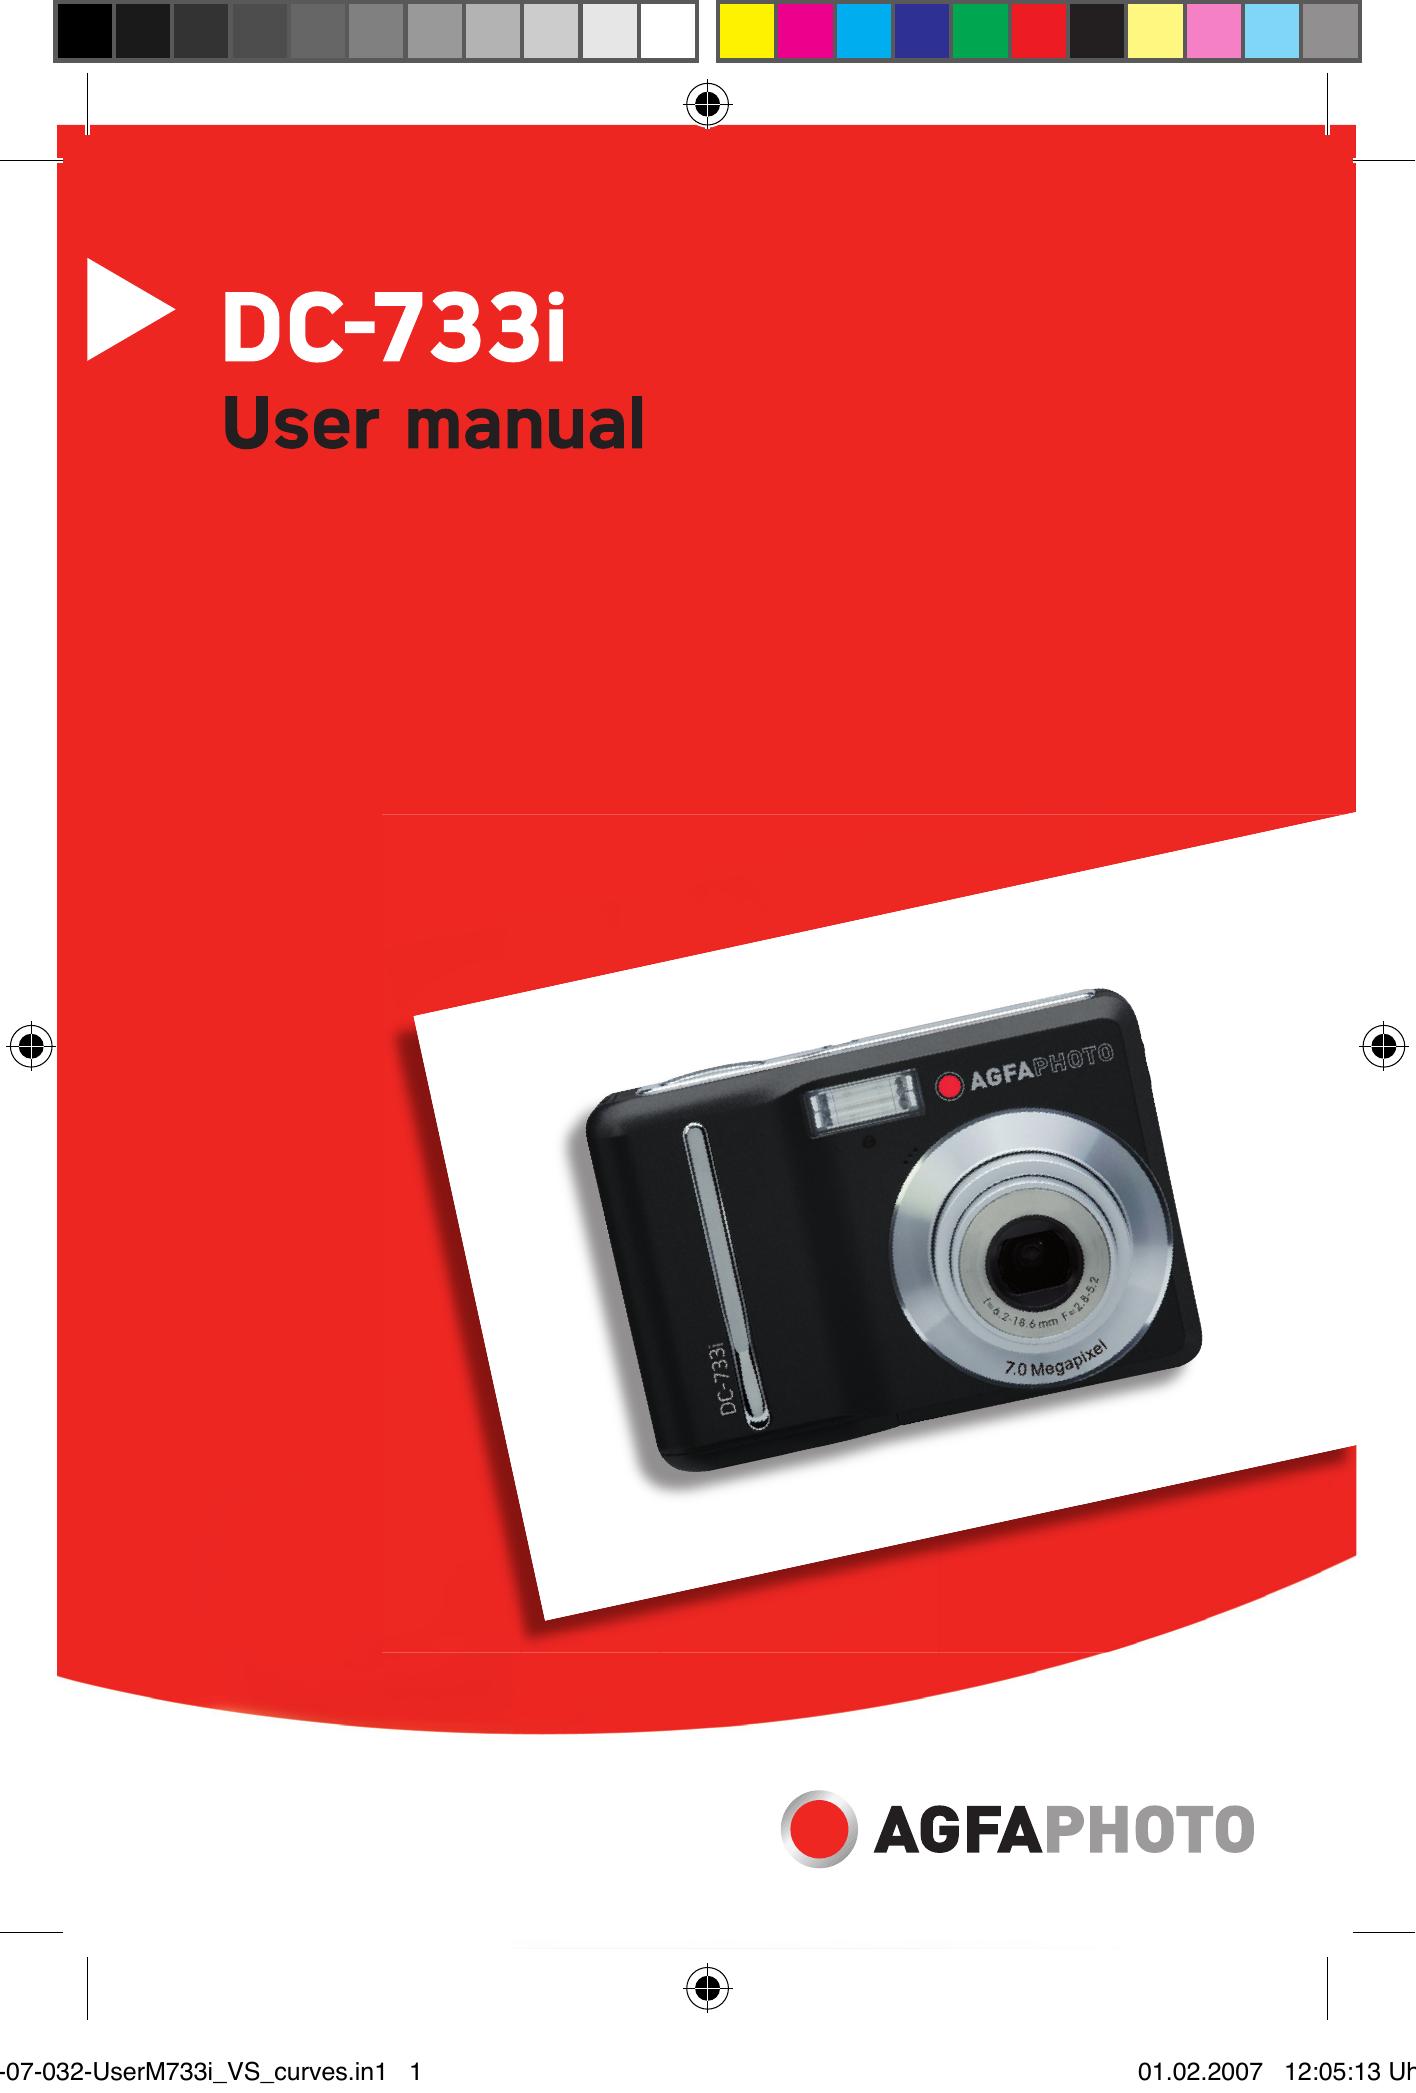 AGFA DC-733i Digital Camera User Manual